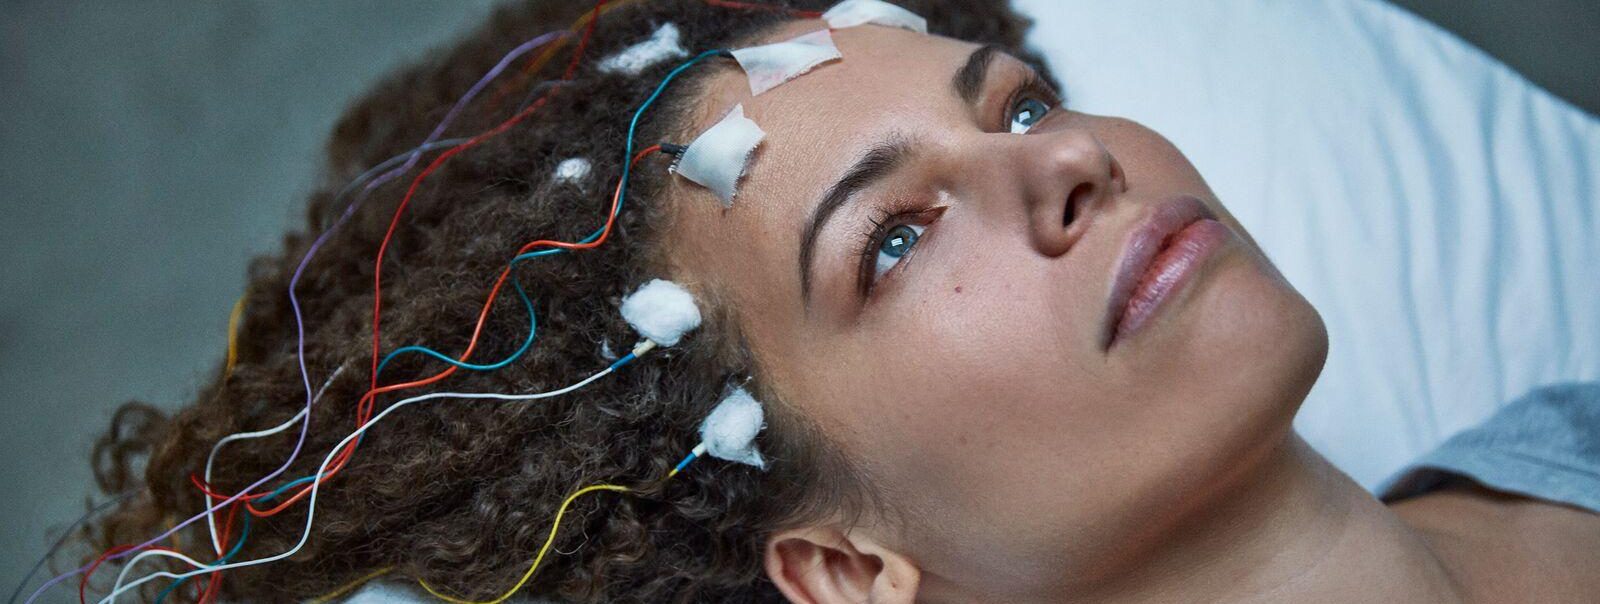 Unrest Image With EEG plugs to head